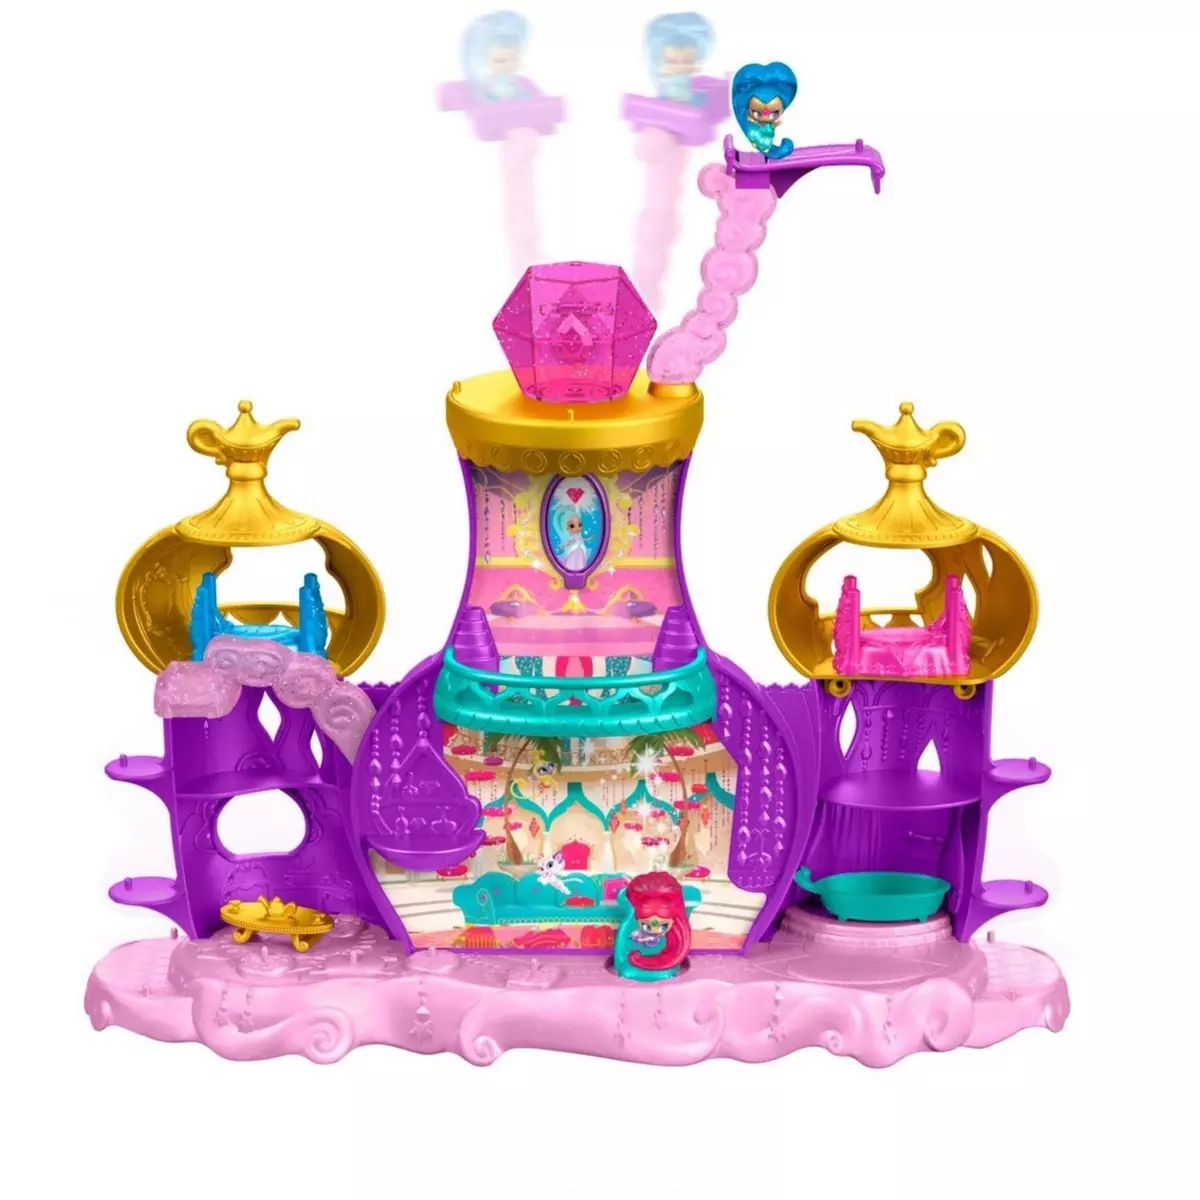 Fisher price Le palais du Génie avec mini figurines - Shimmer and Shine - Teenie Genies